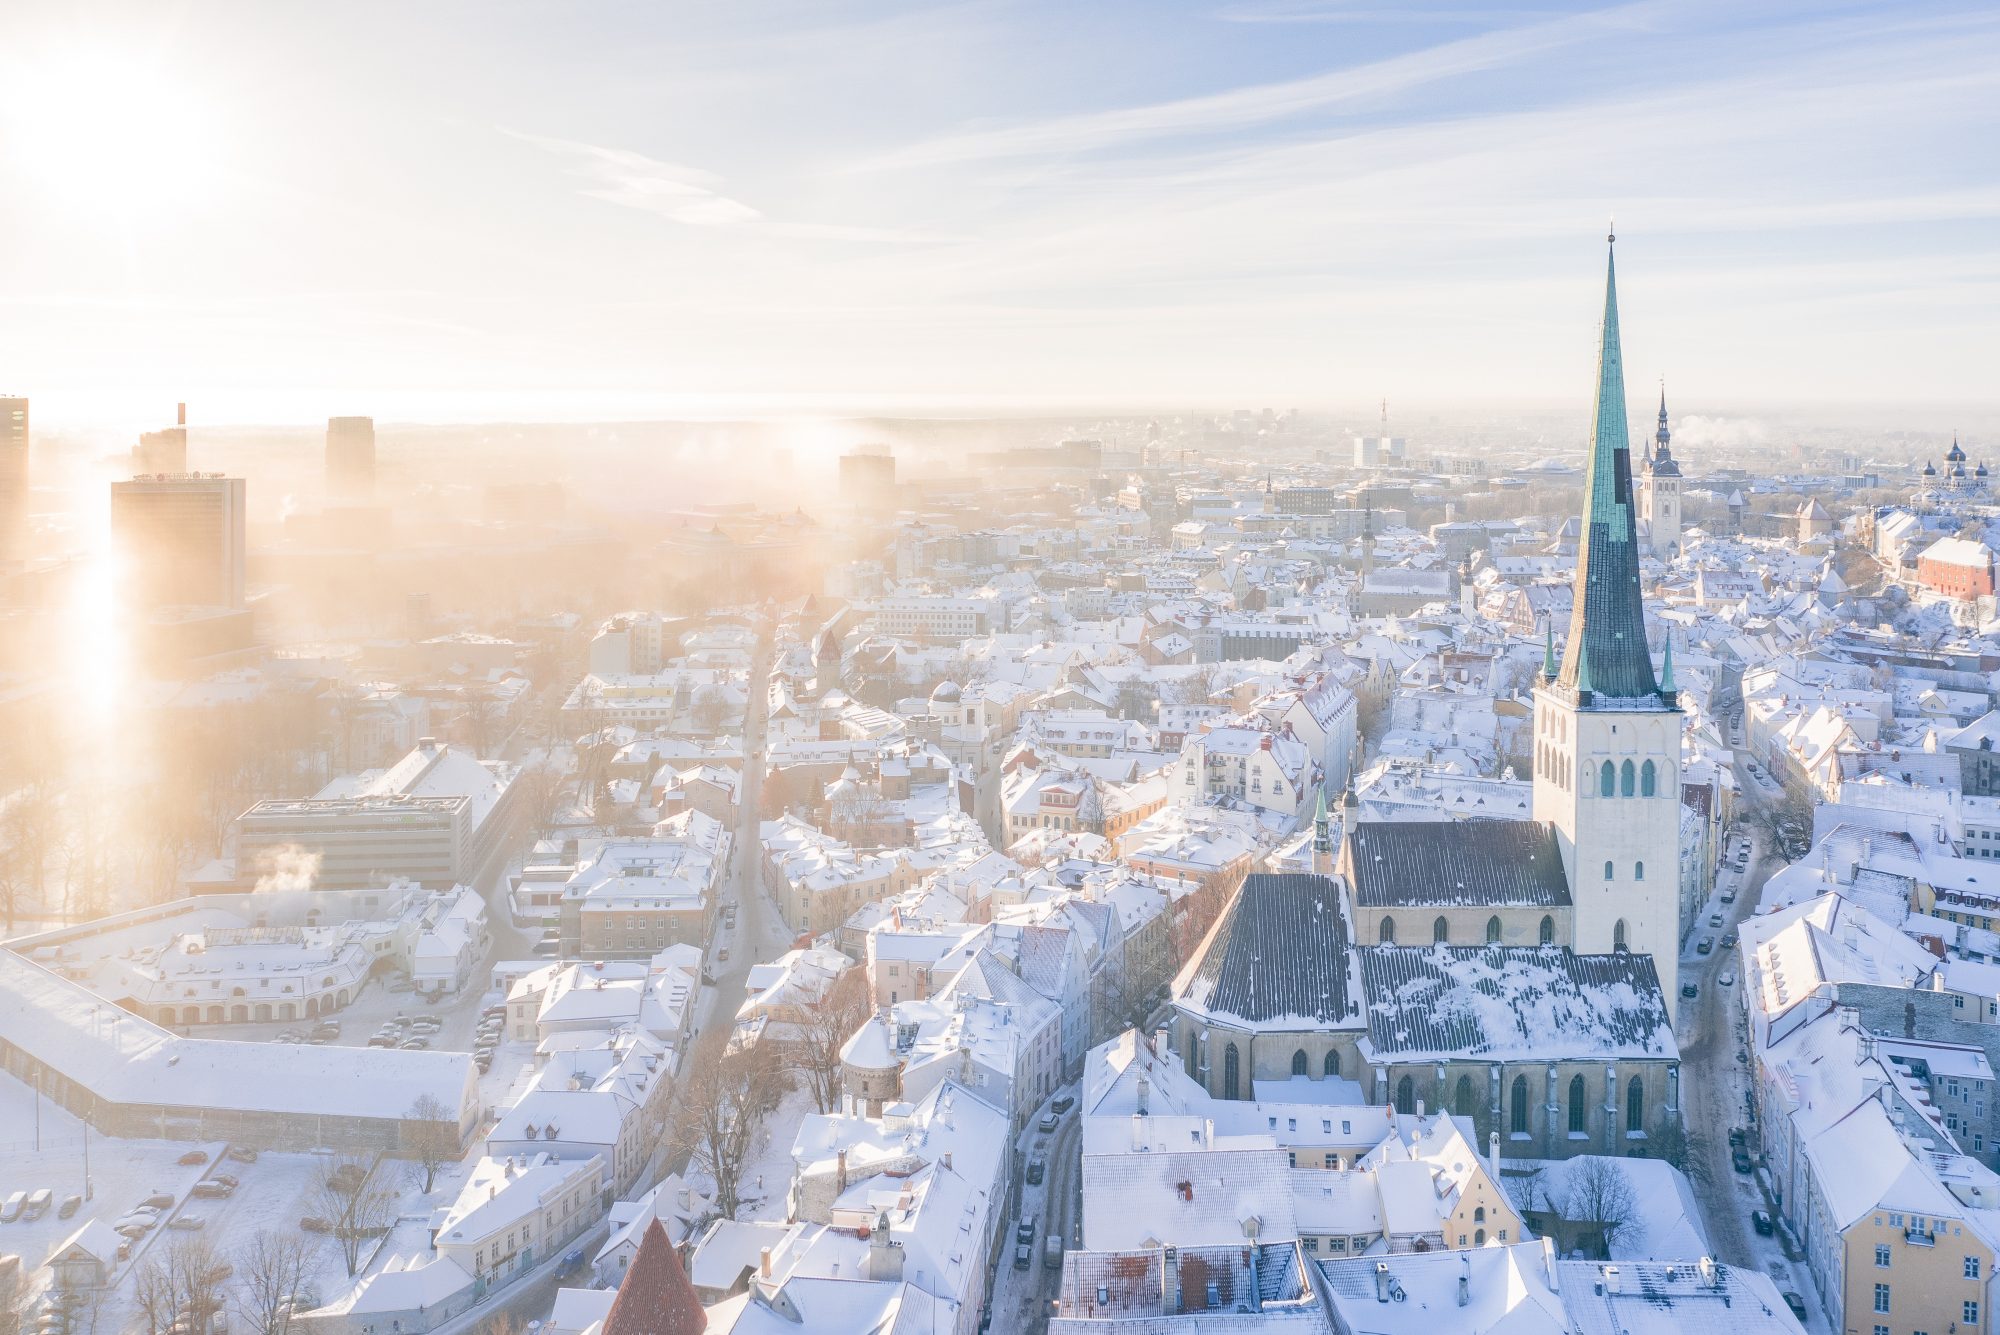 Estonian real estate market in 2019: market activity is slowing down